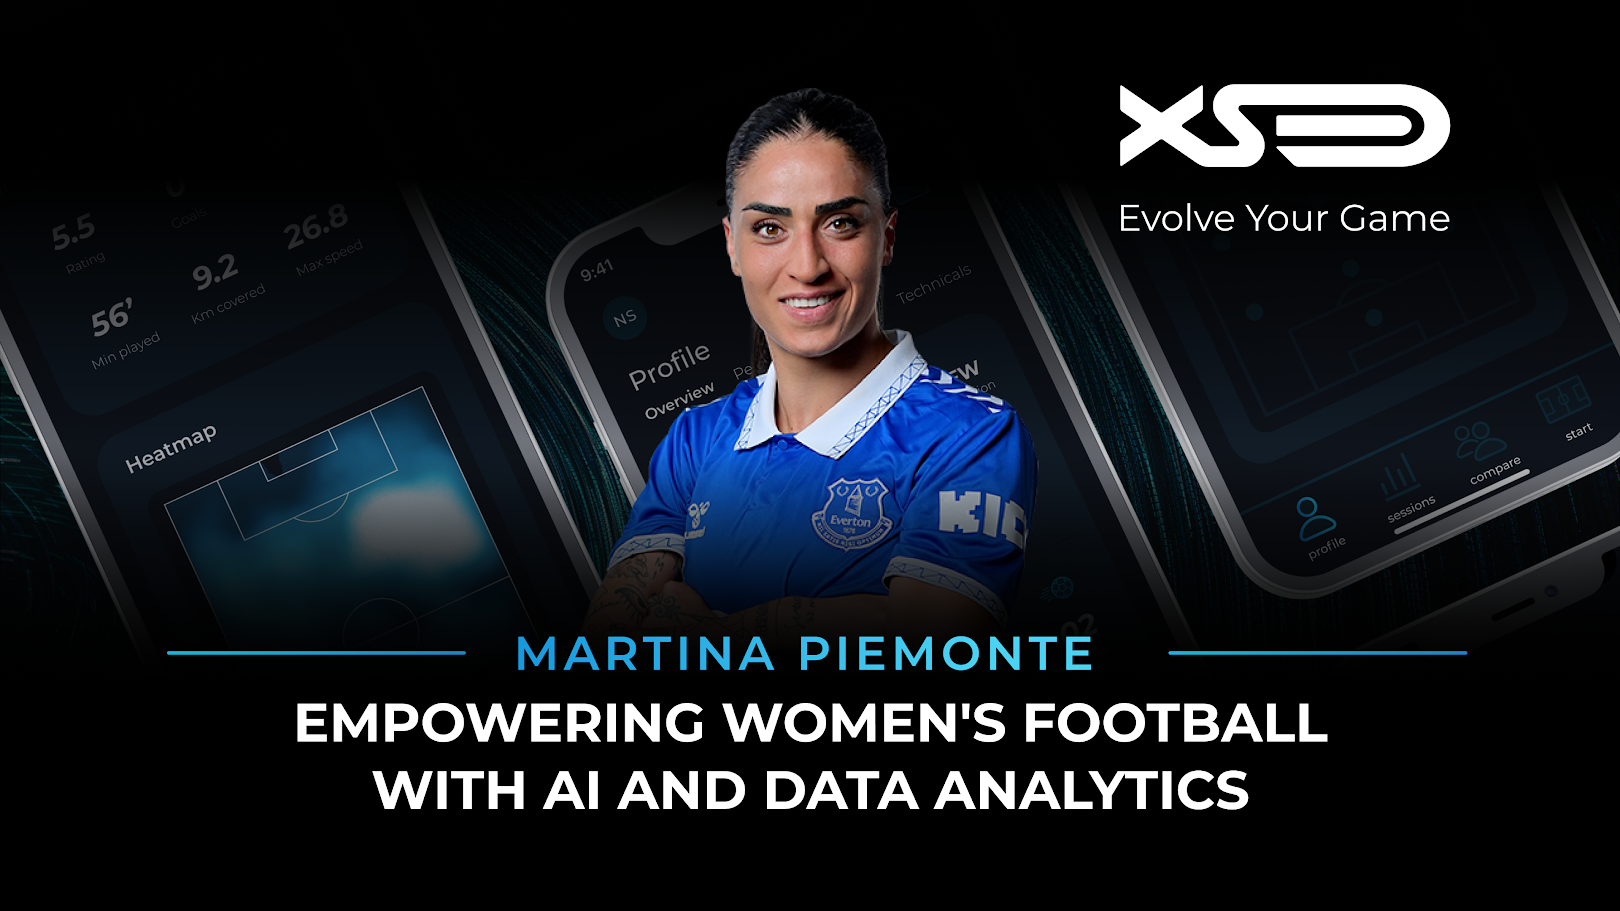 Martina Piemonte: Empowering Women’s Football with AI and Data Analytics